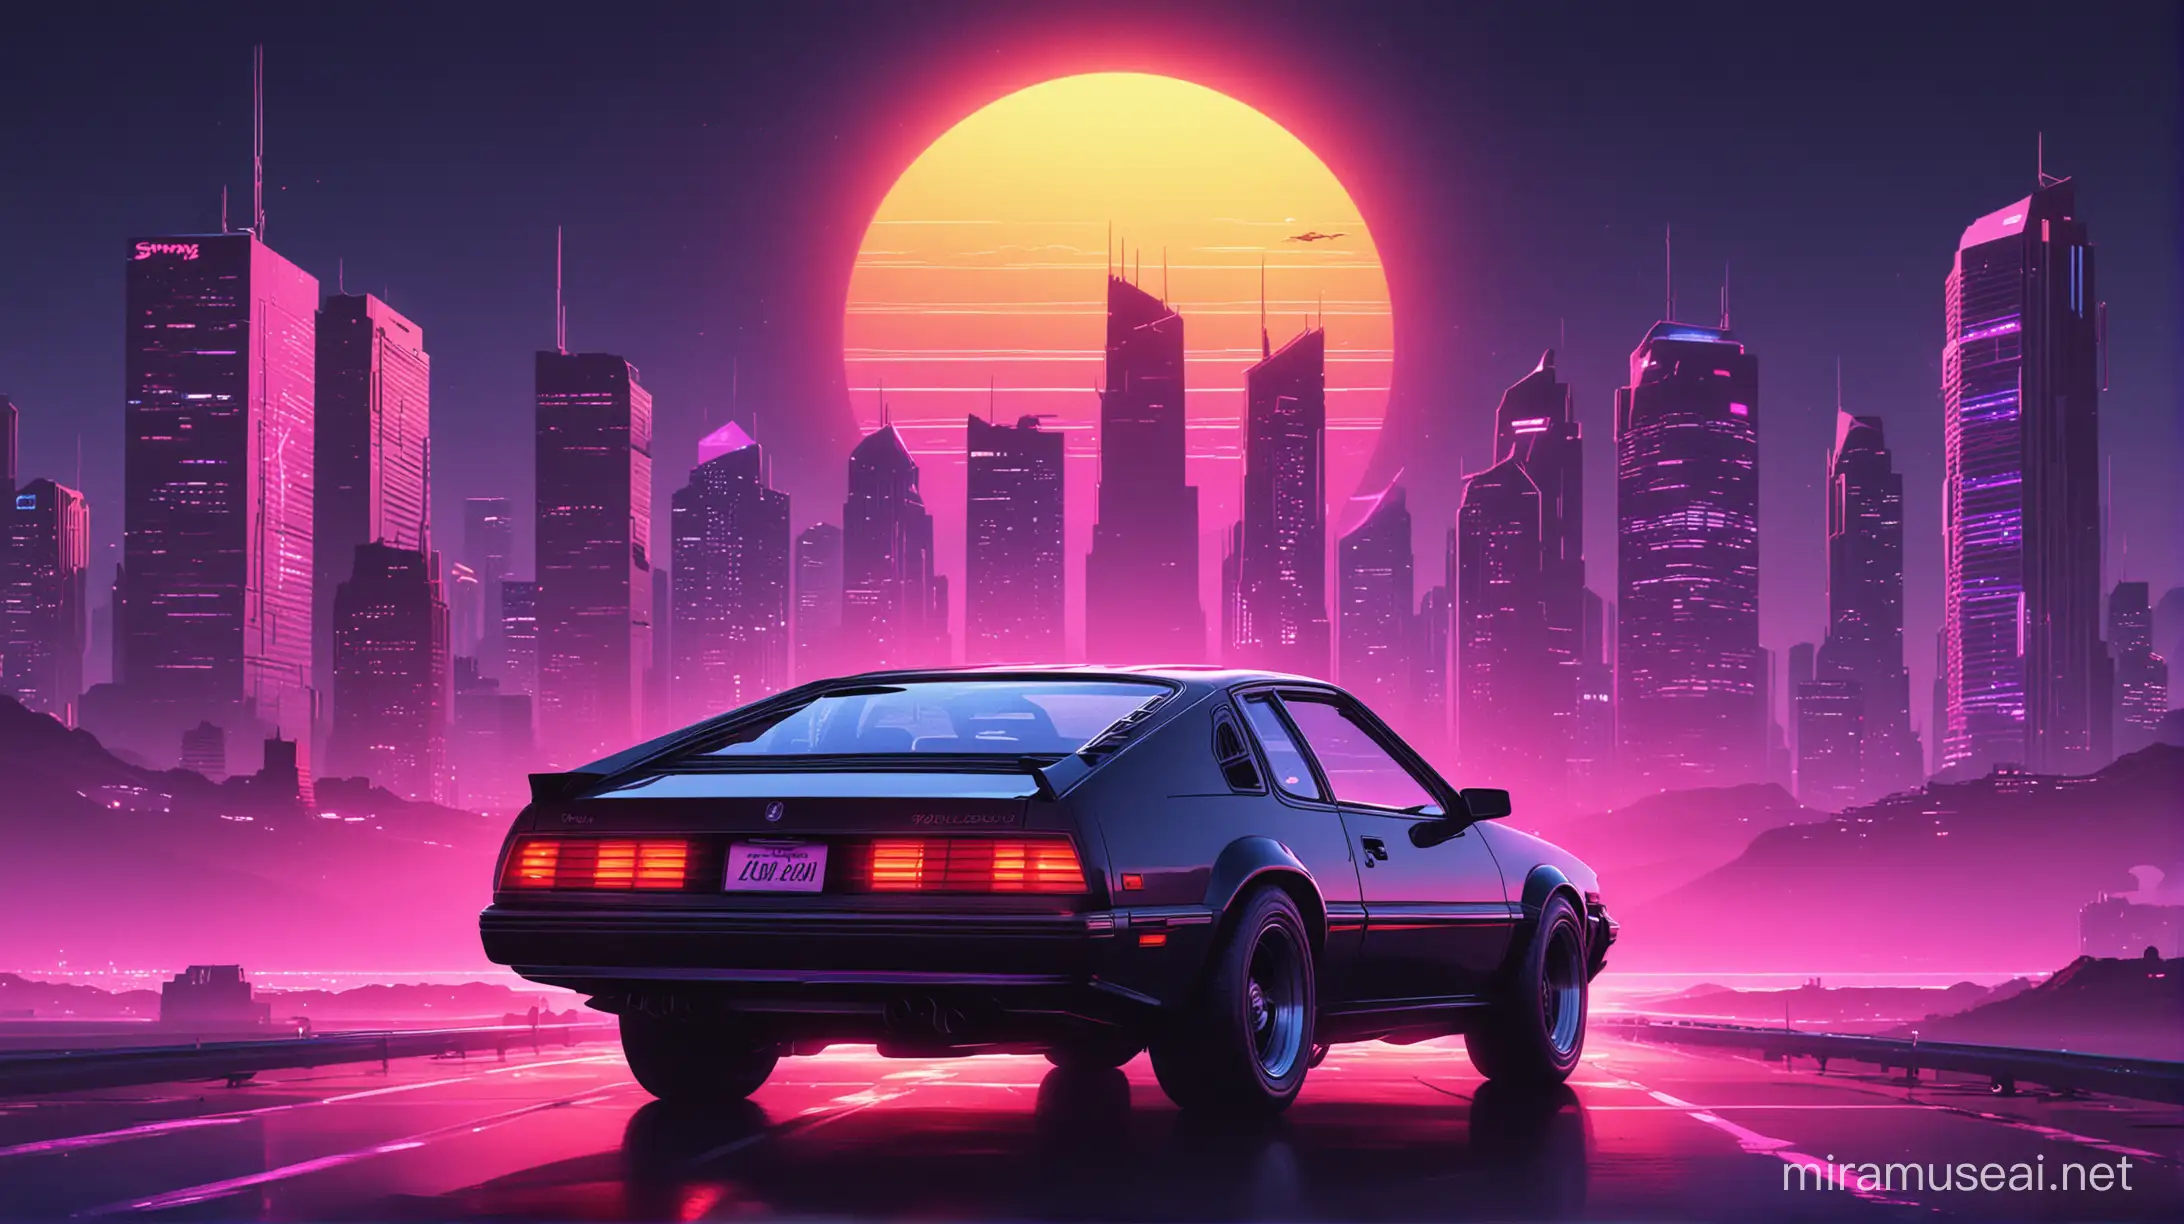 Synthwave Car Cruising through Neon City at Sunset